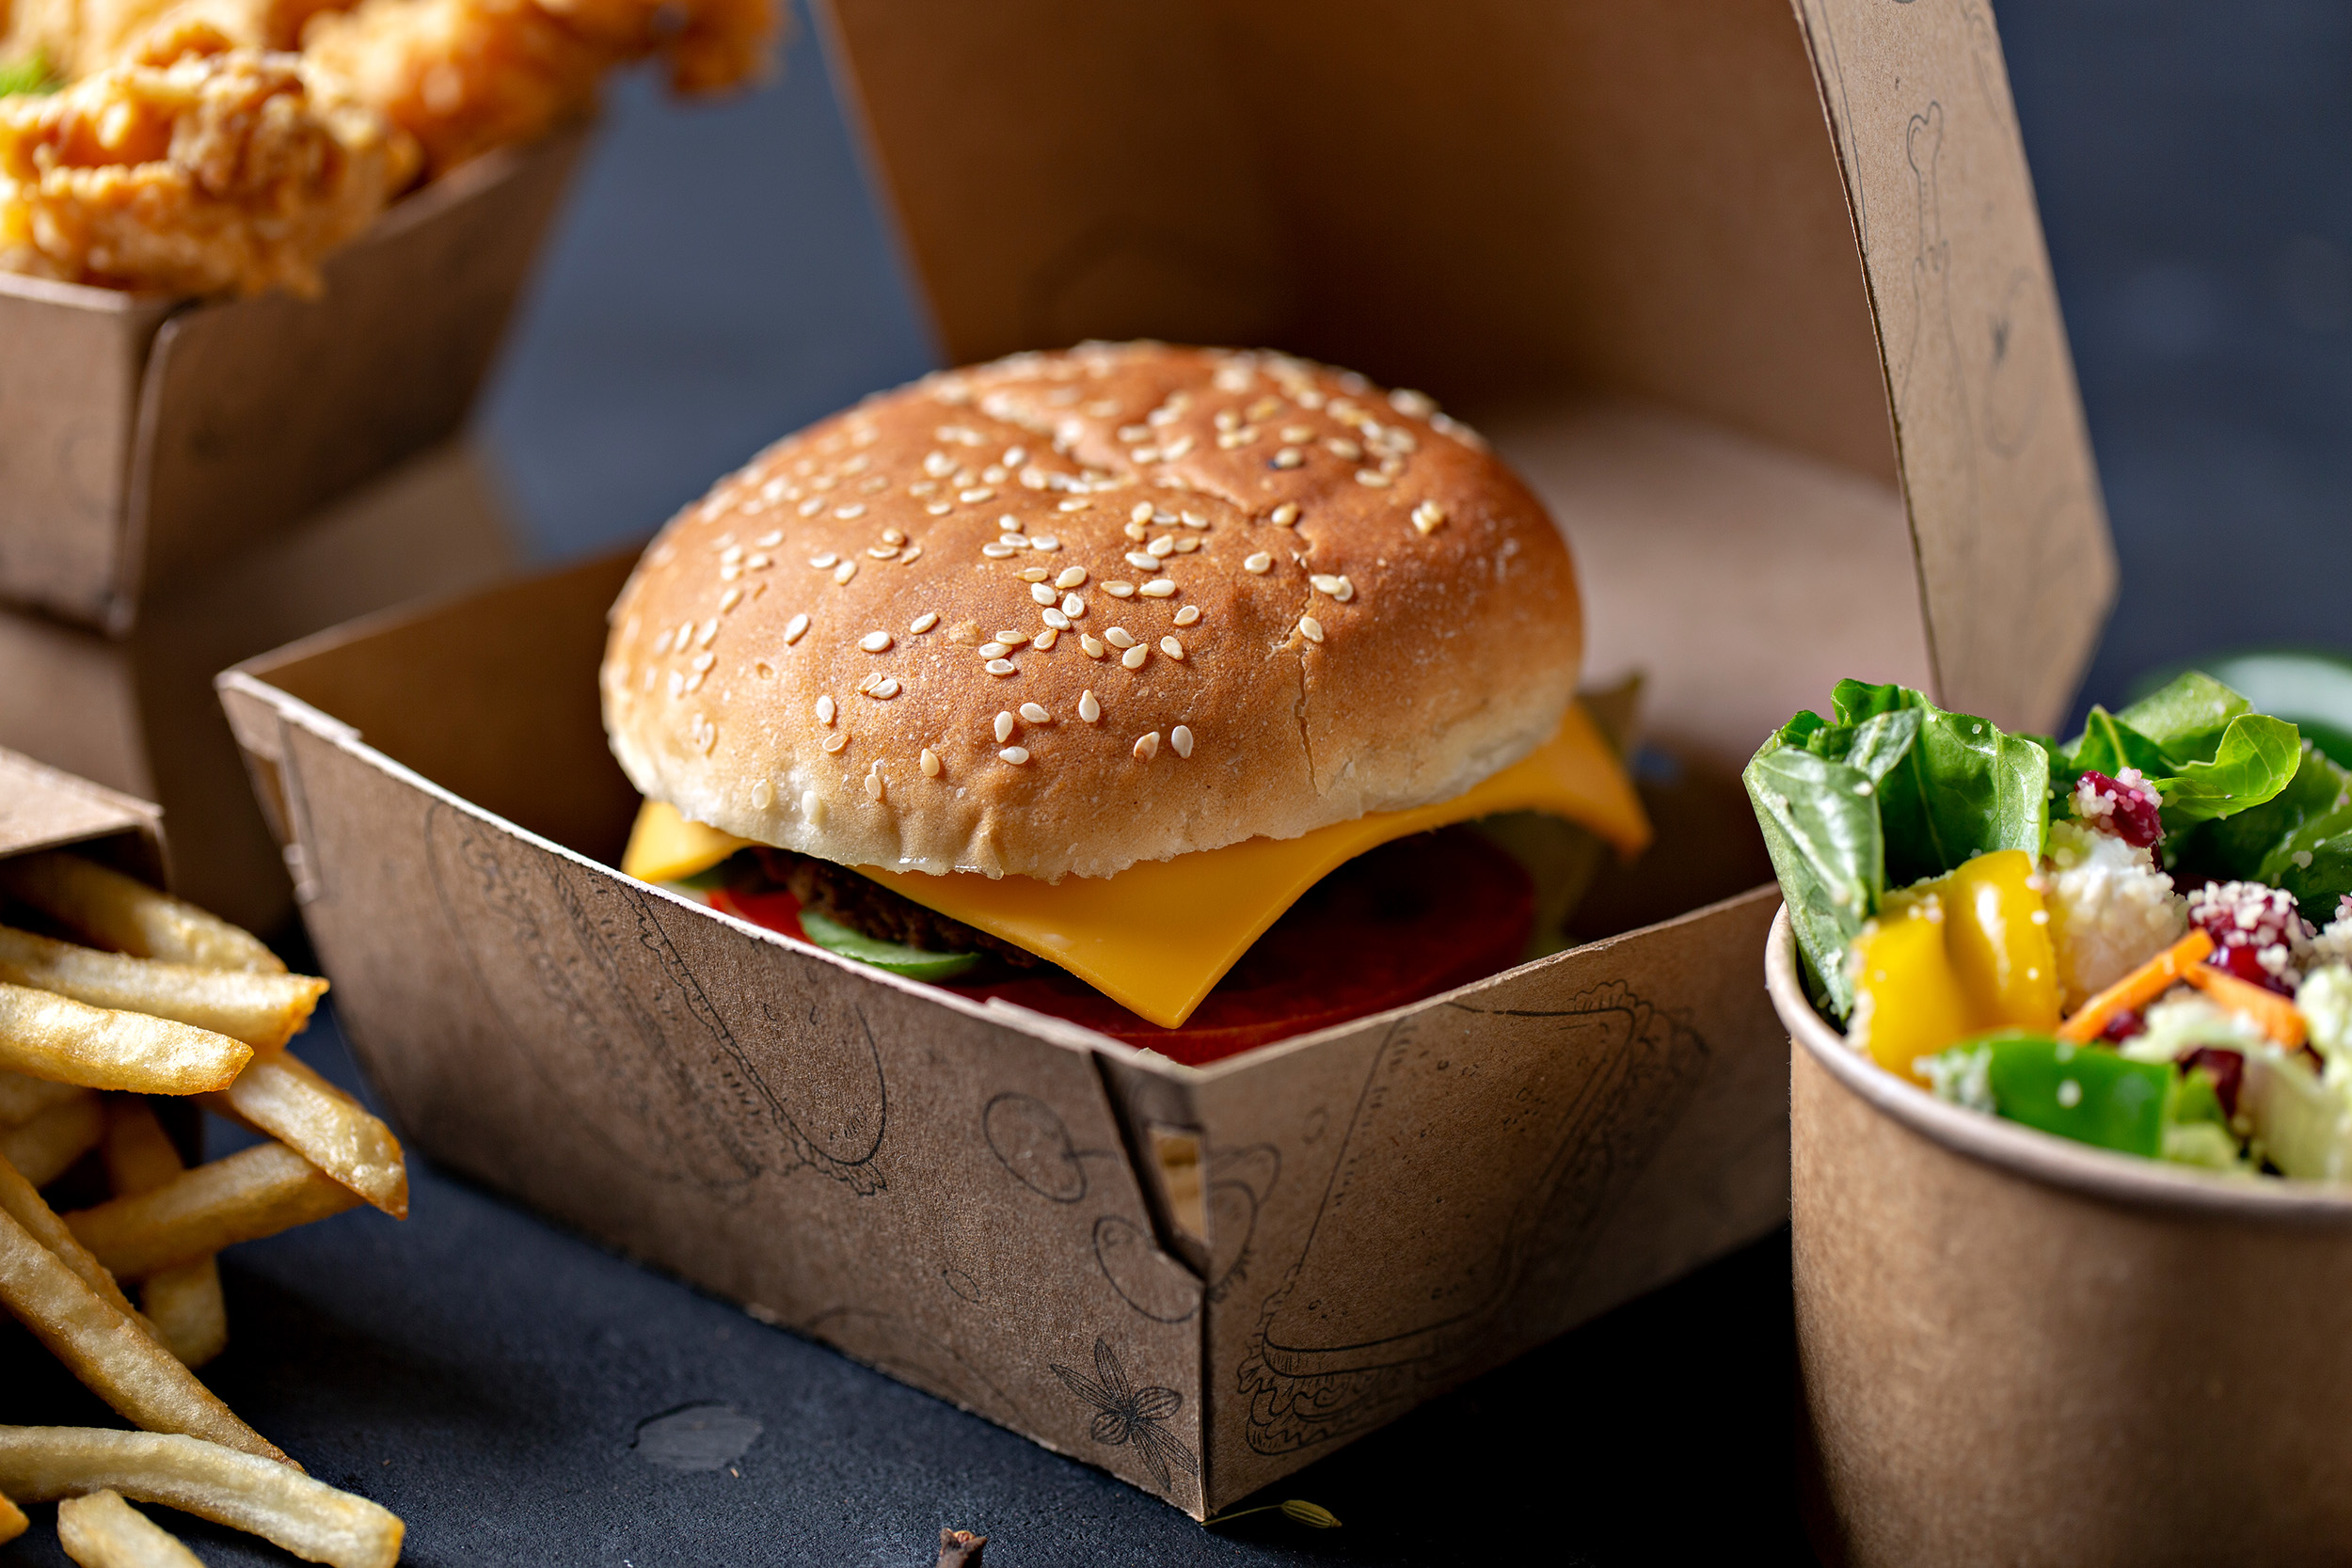 paper-burger-packaging-pfas-IA-Scrabble-via-Shutterstock